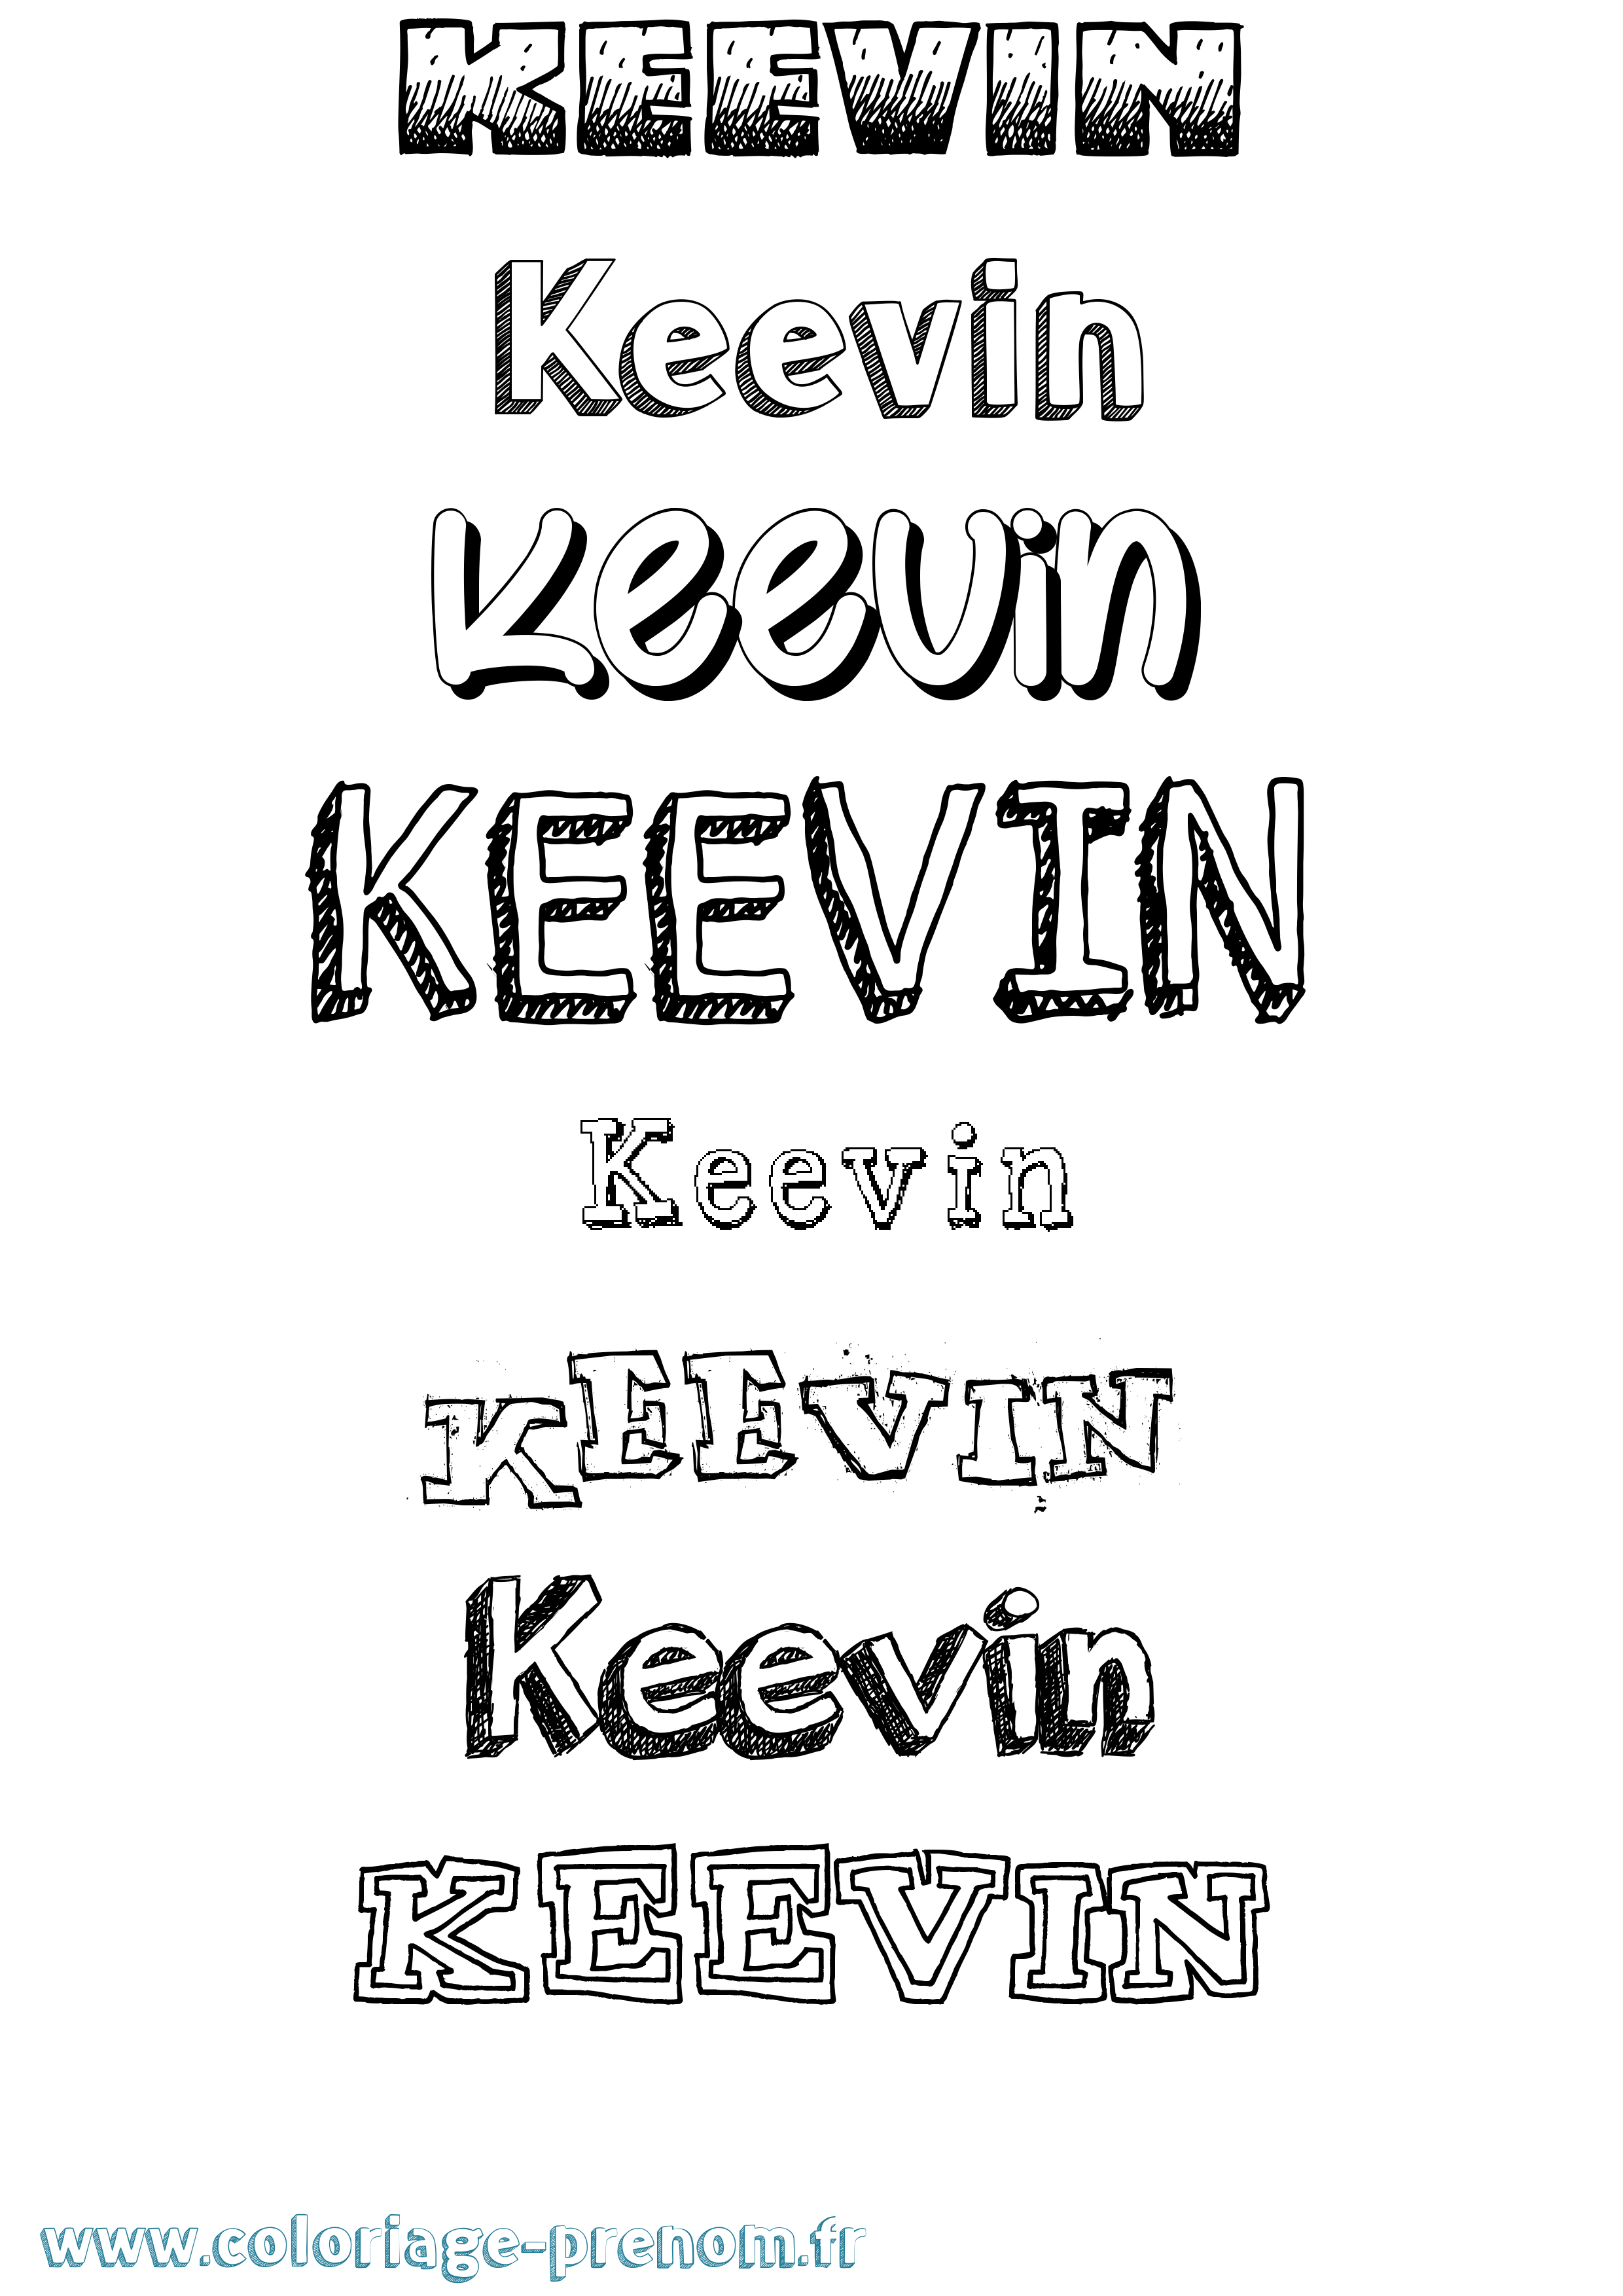 Coloriage prénom Keevin Dessiné